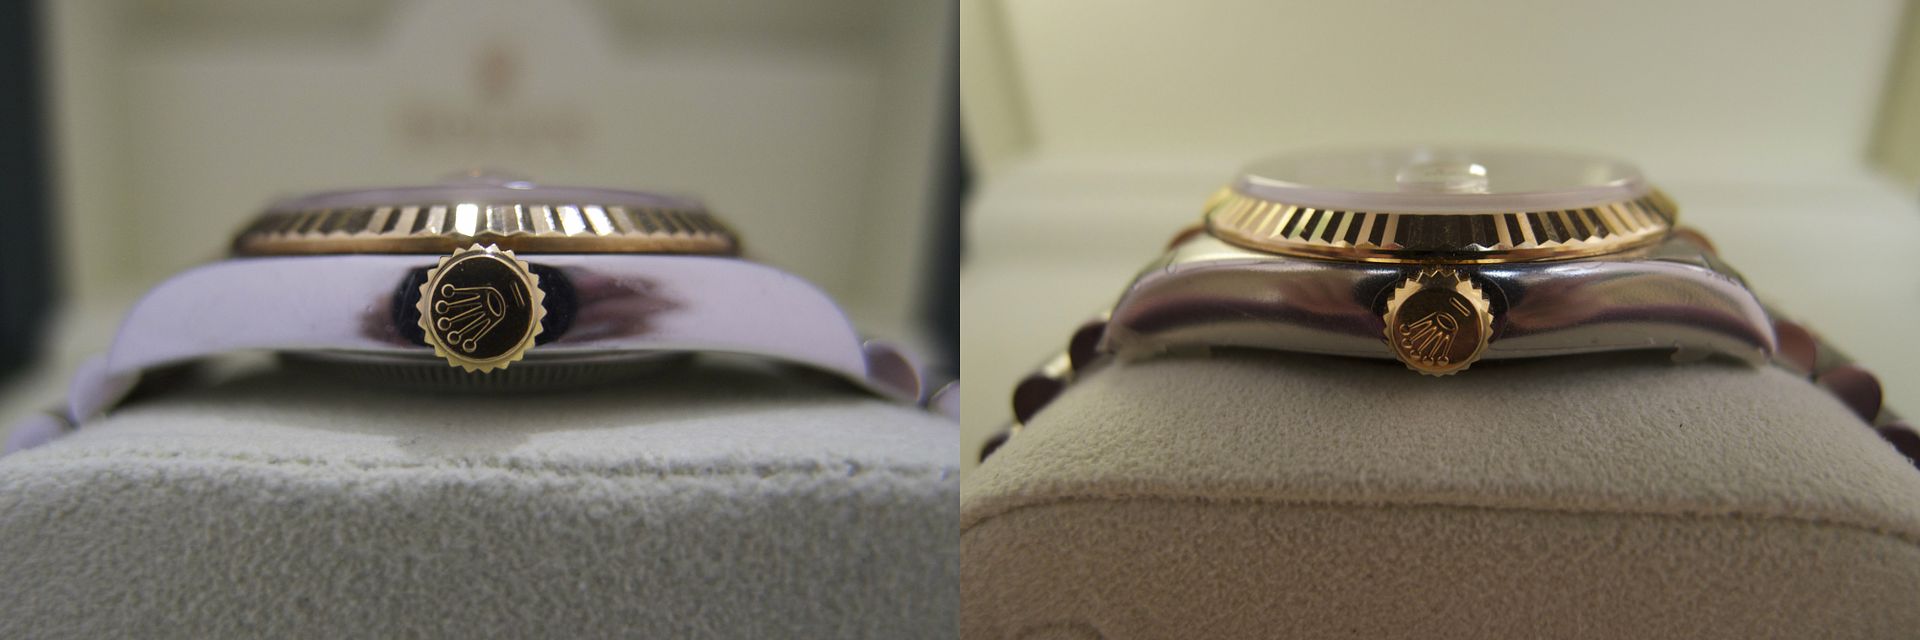  same crown design on Rolex 16233 and 116233 Datejust models